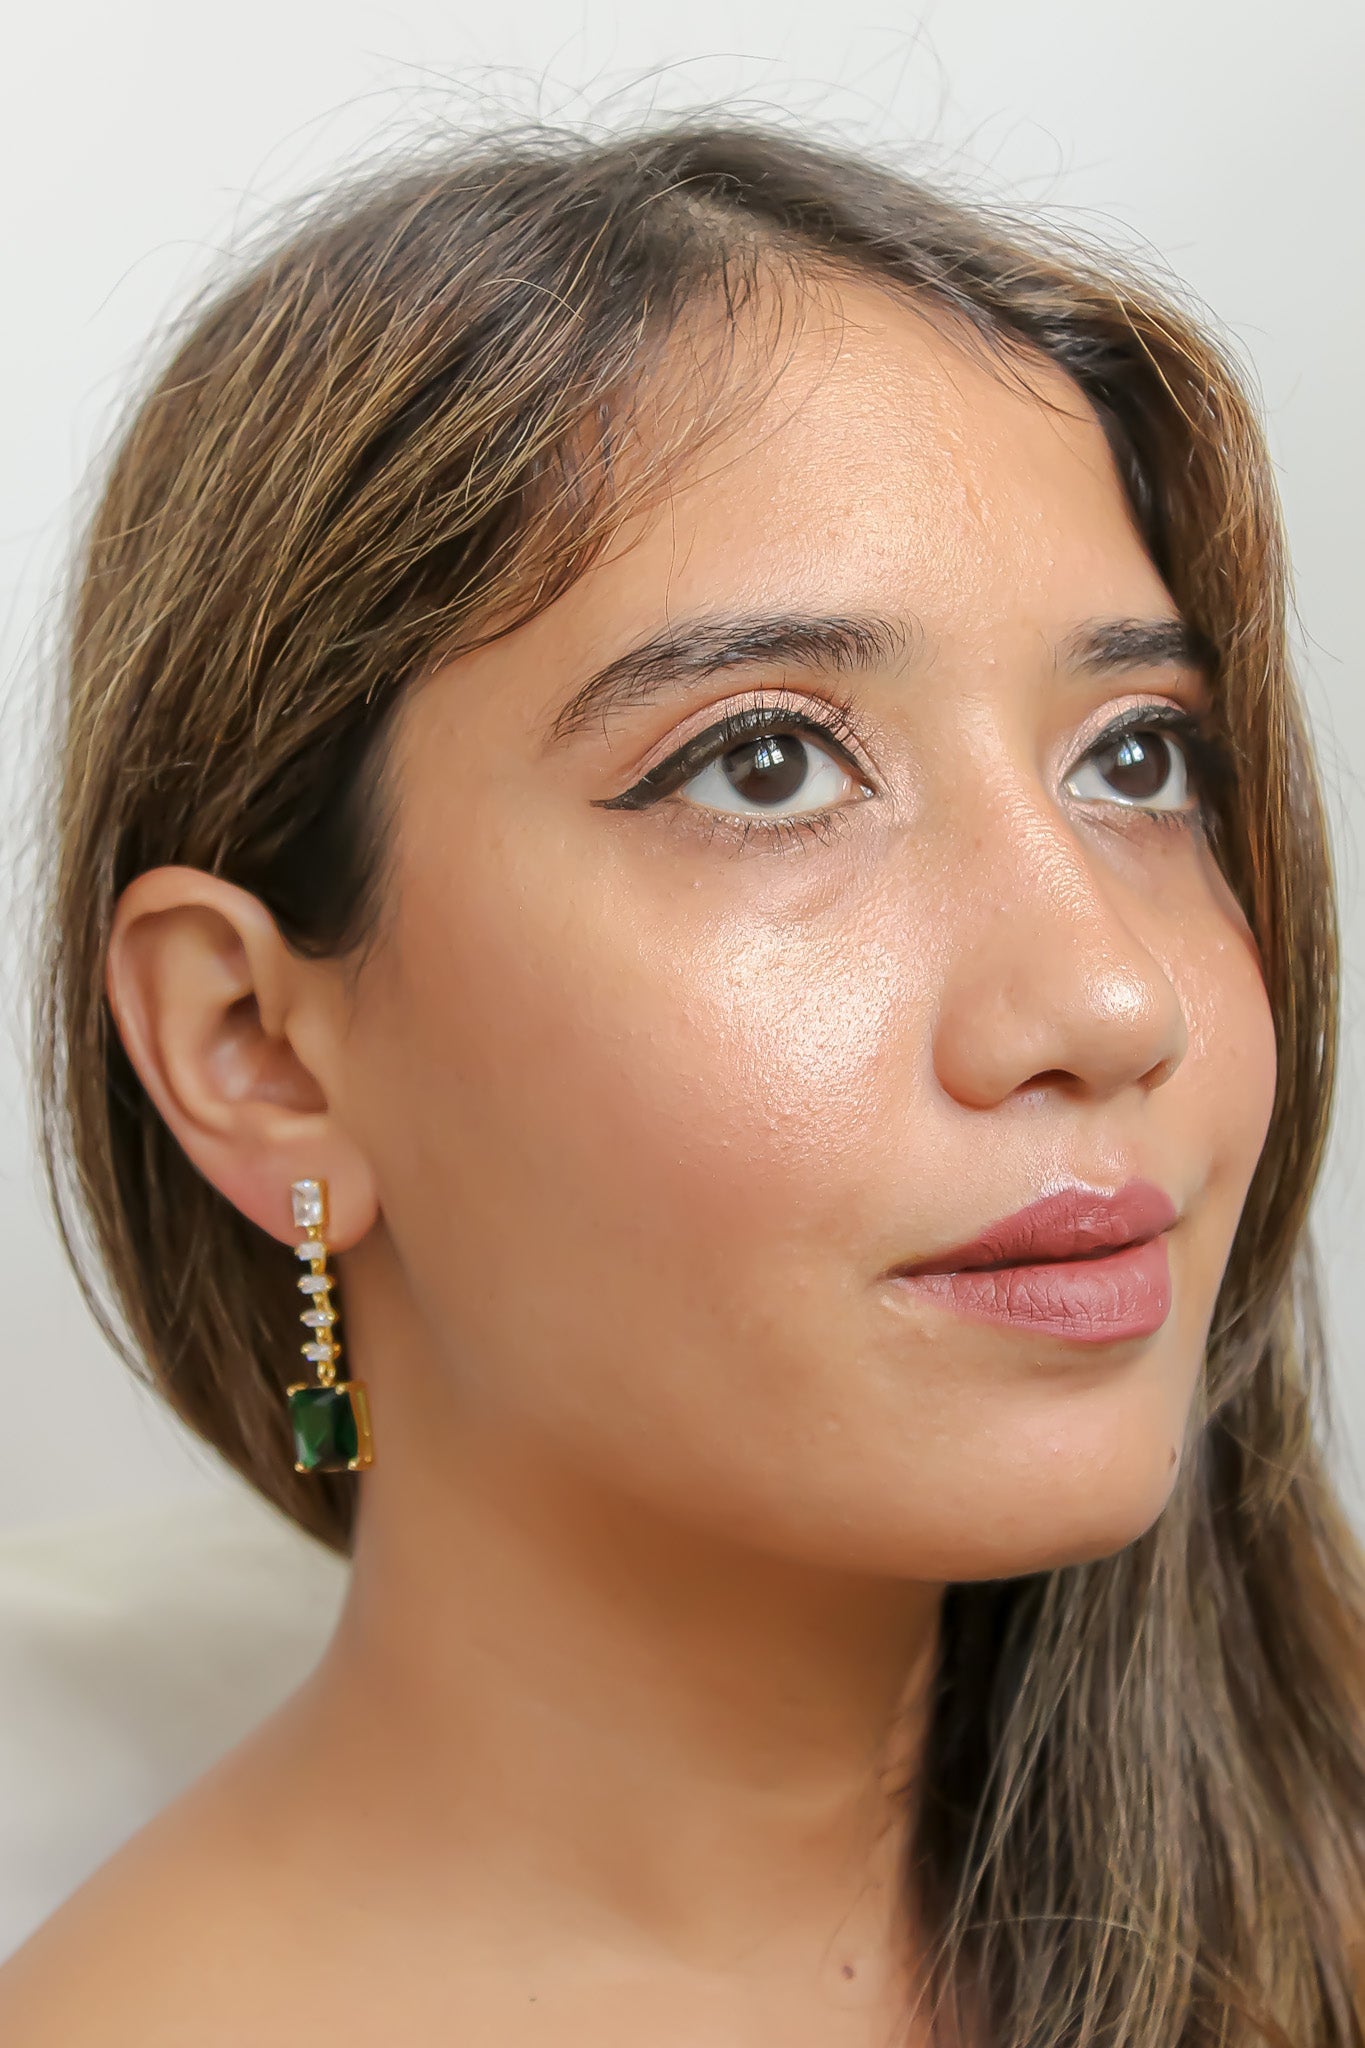 Golden Cruise Benares Earrings: 18K Gold-Plated with Zirconia Stones for Sensitive Ears - Jewelry & Watches - Bijou Her -  -  - 